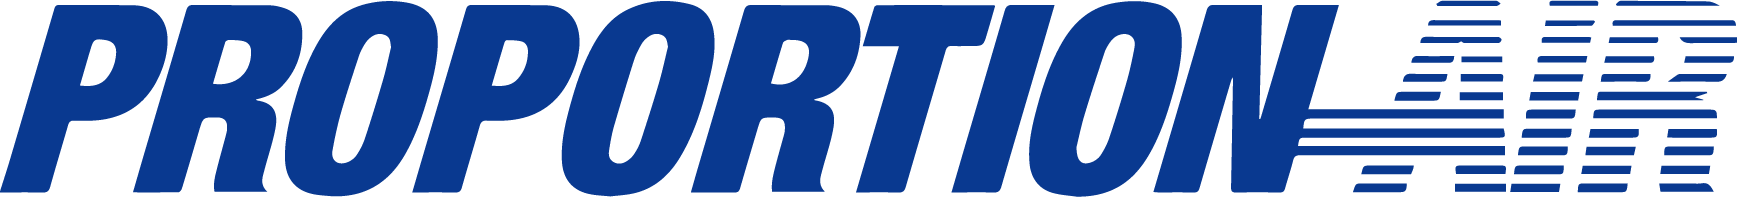 Proportion-Air Logo